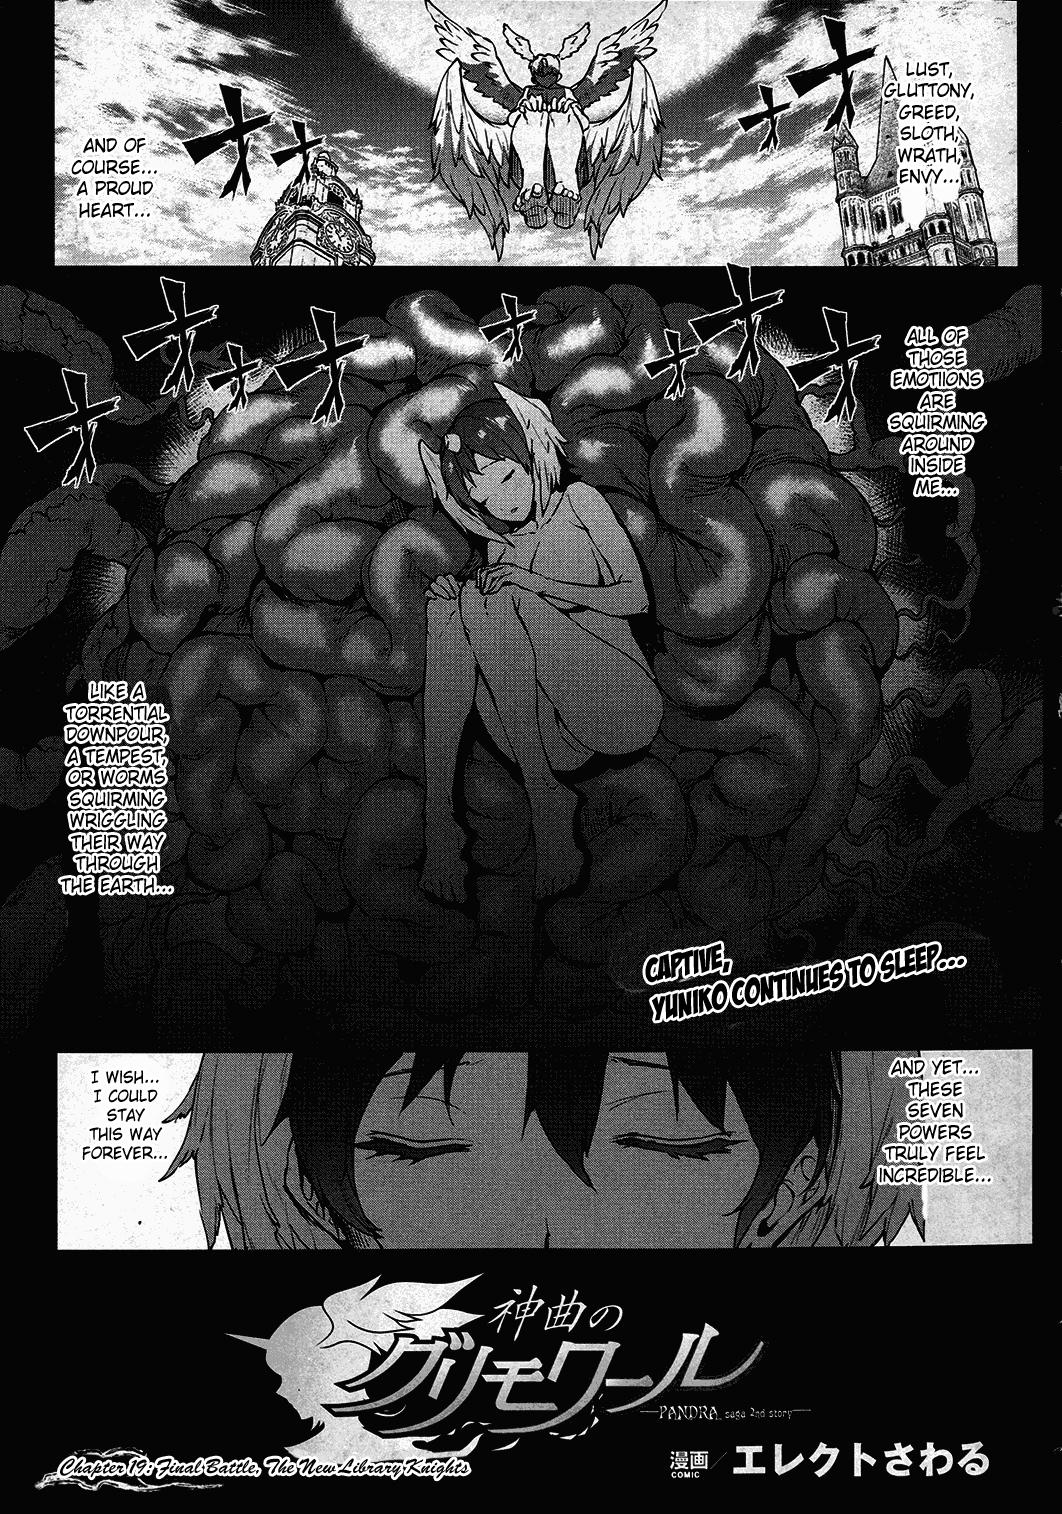 [Erect Sawaru] Shinkyoku no Grimoire -PANDRA saga 2nd story- Ch. 1-19 + Side Story x 3 [English] [SaHa] 508